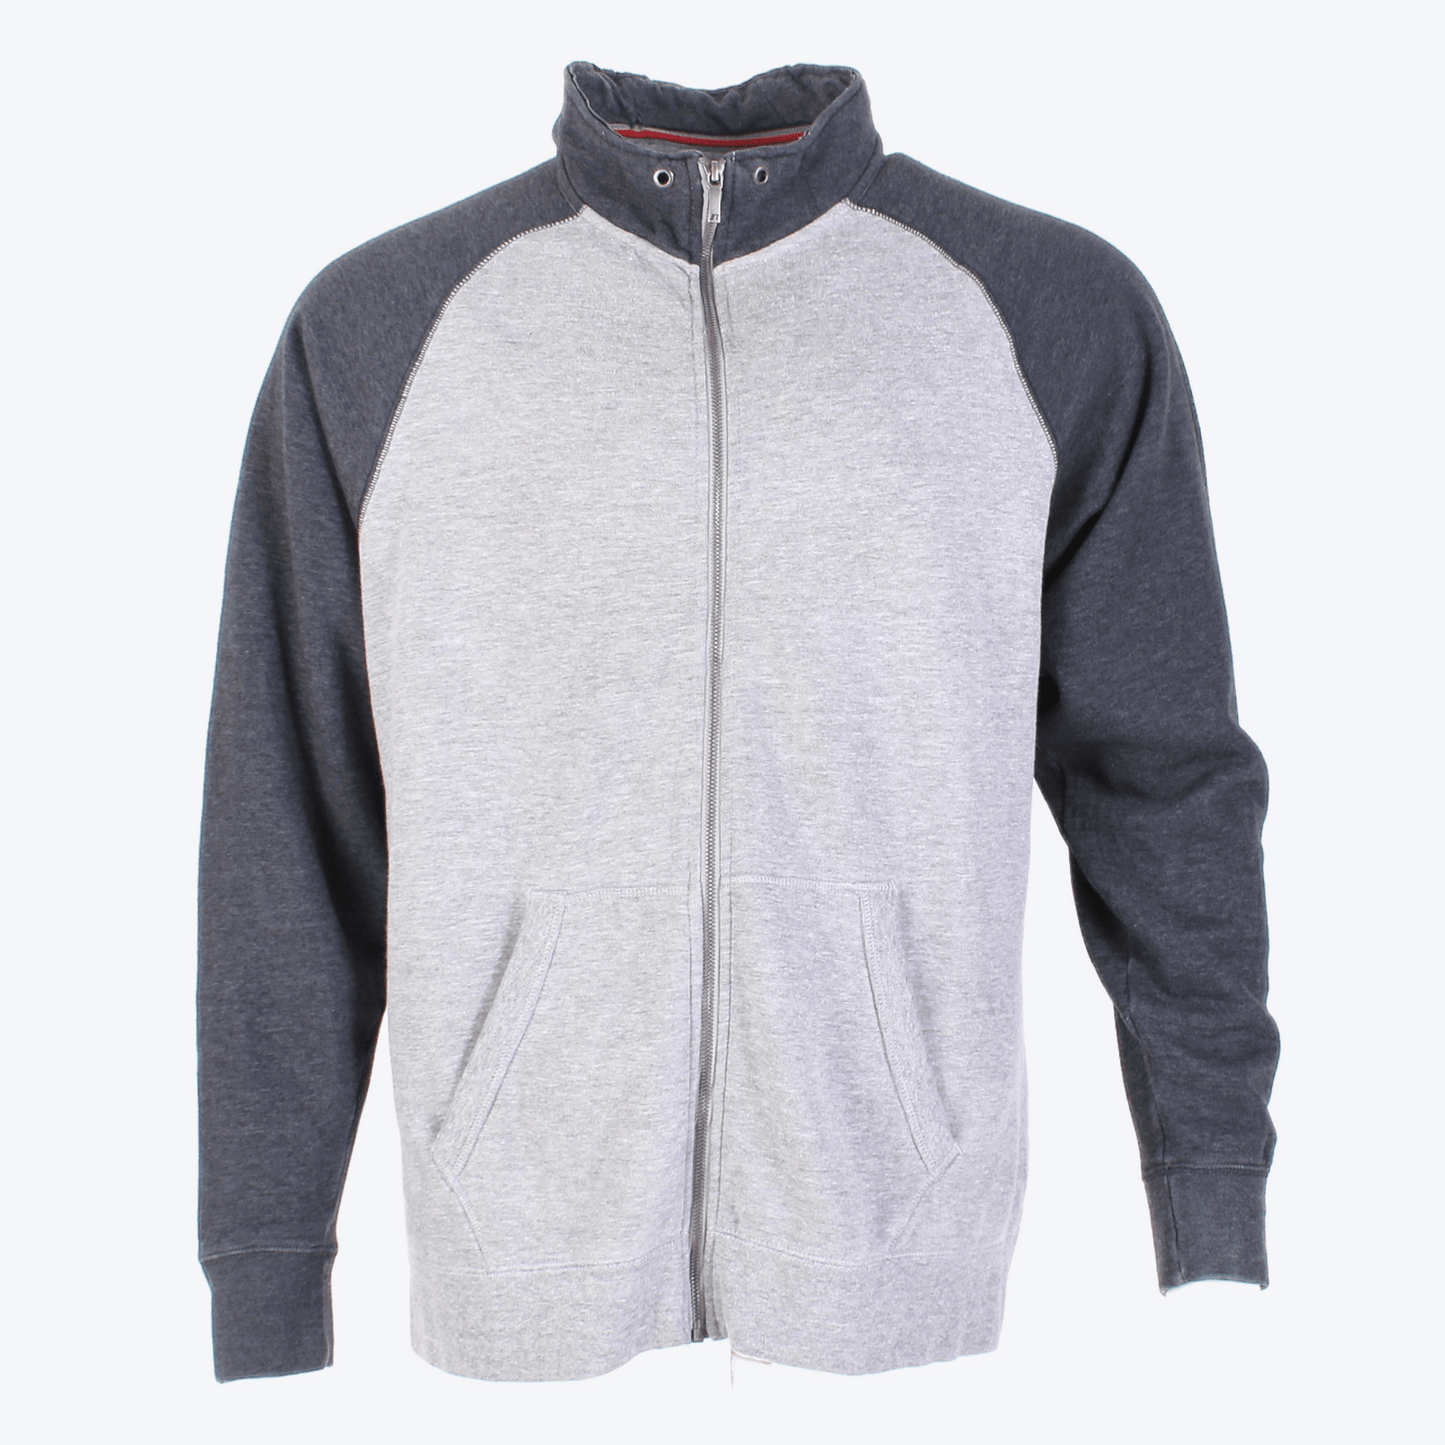 Vintage Zipped Sweatshirt - Grey - American Madness